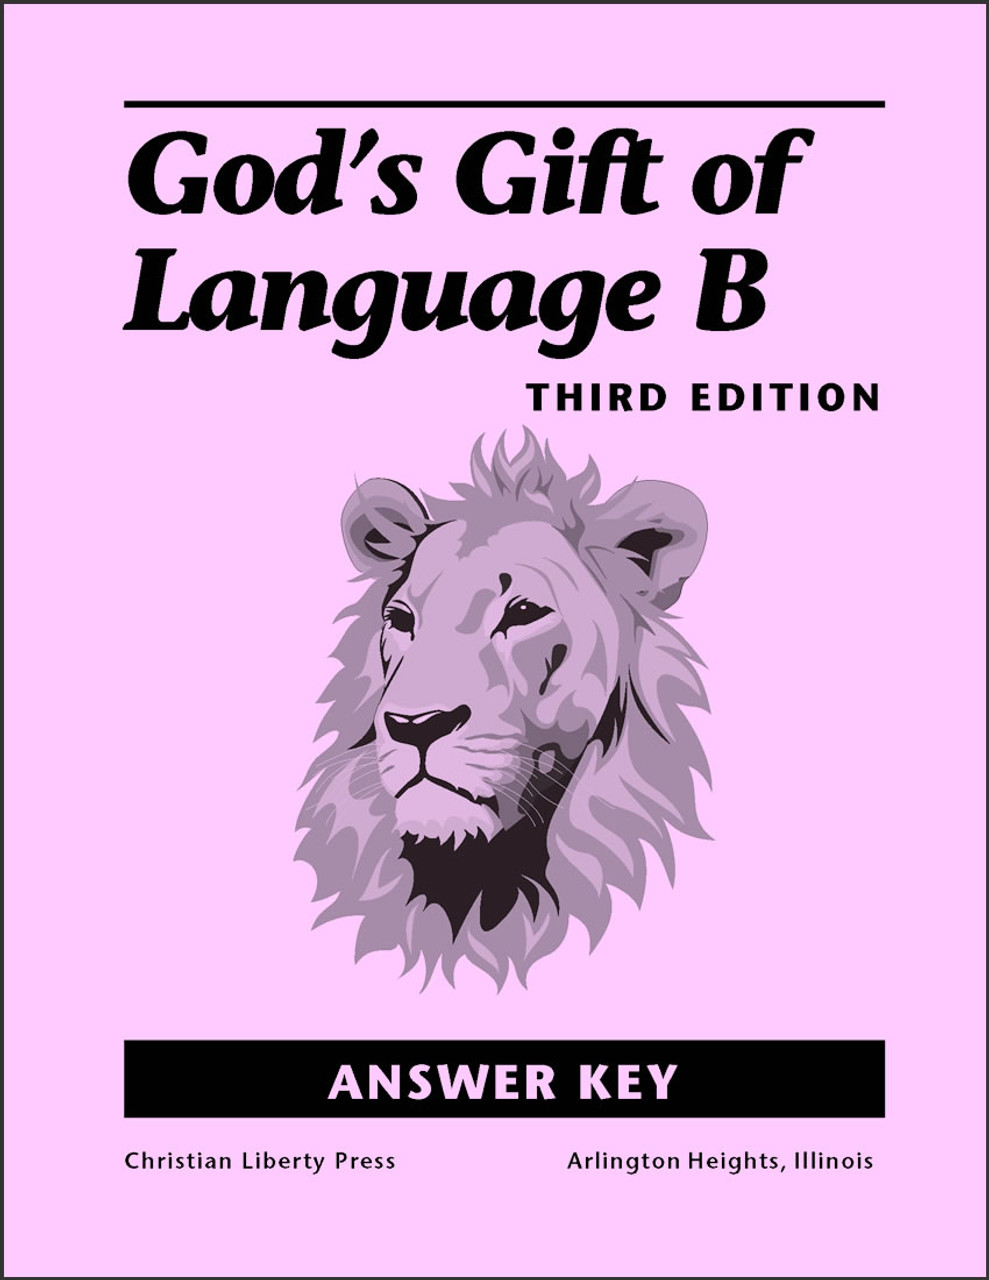 God's Gift of Language B, 3rd edition - Answer Key